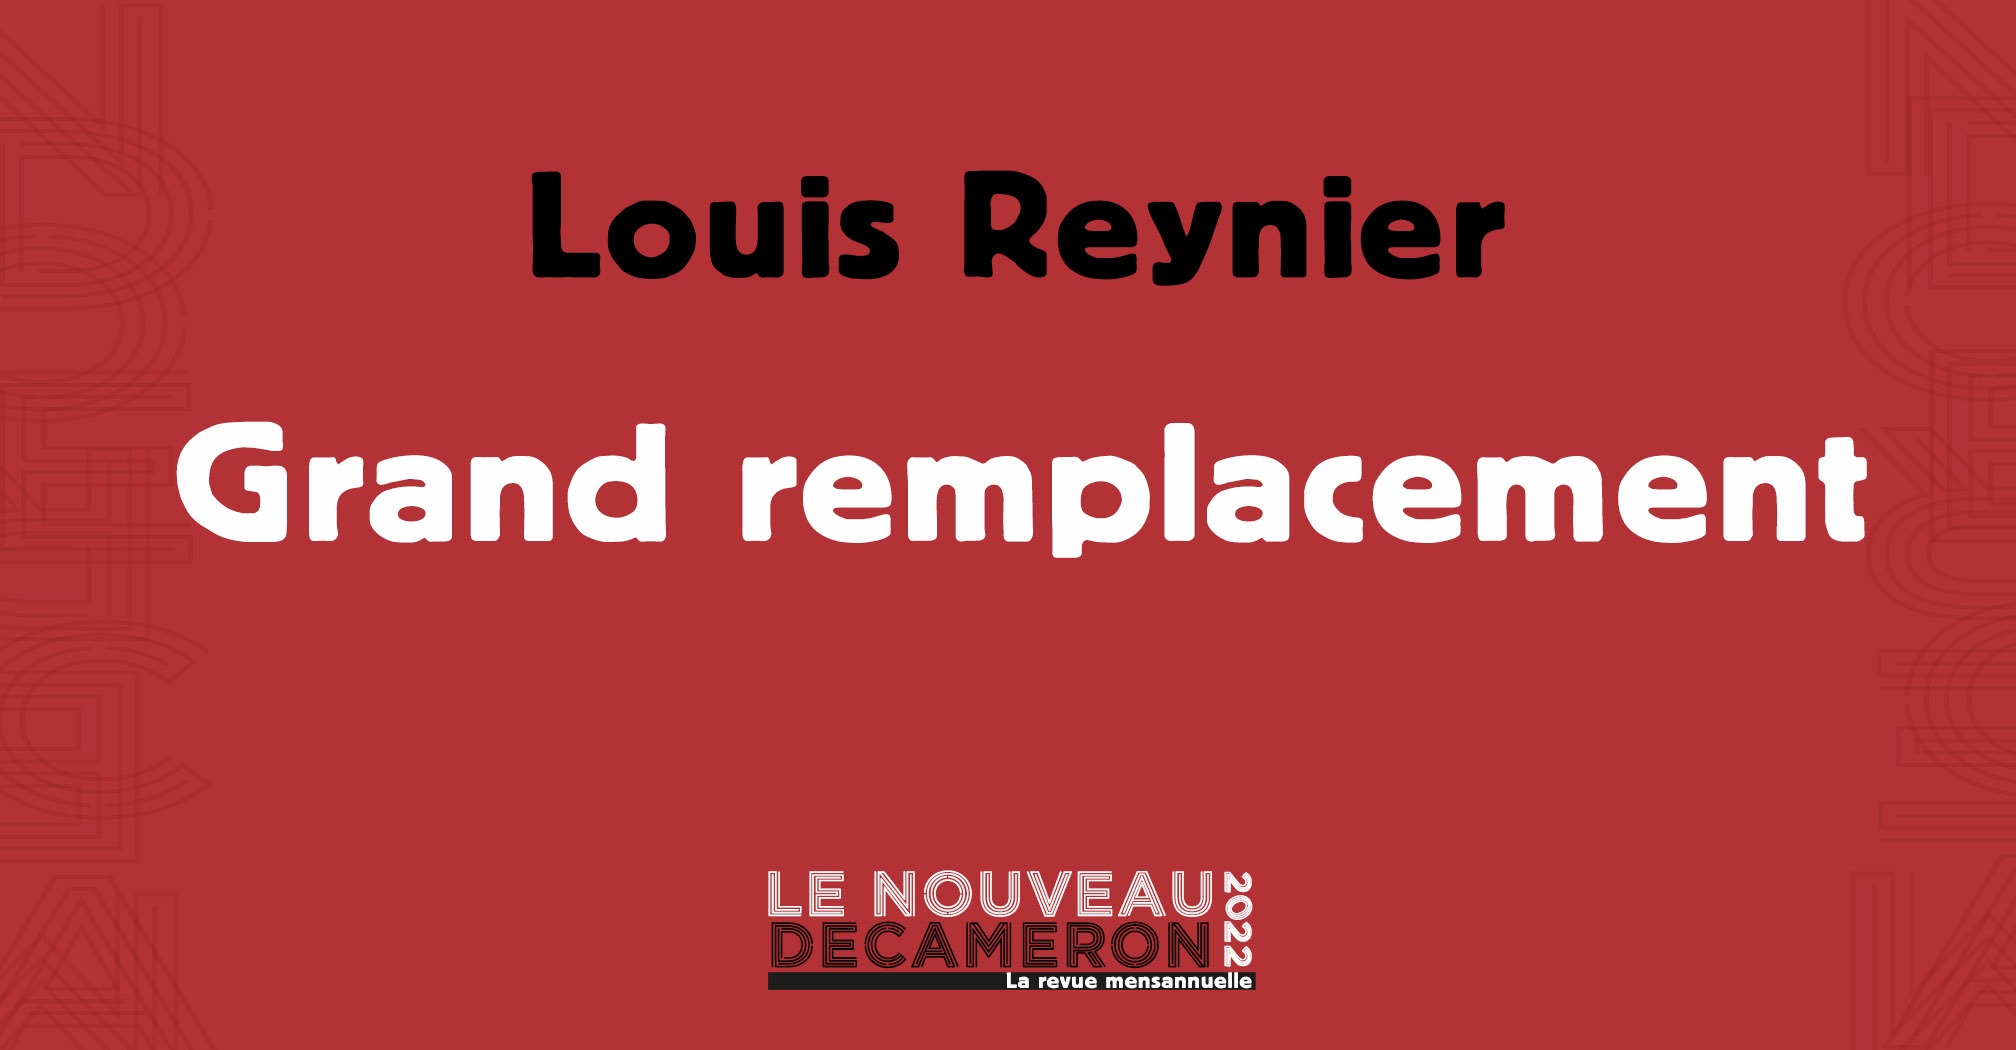 Louis Reynier - Grand remplacement